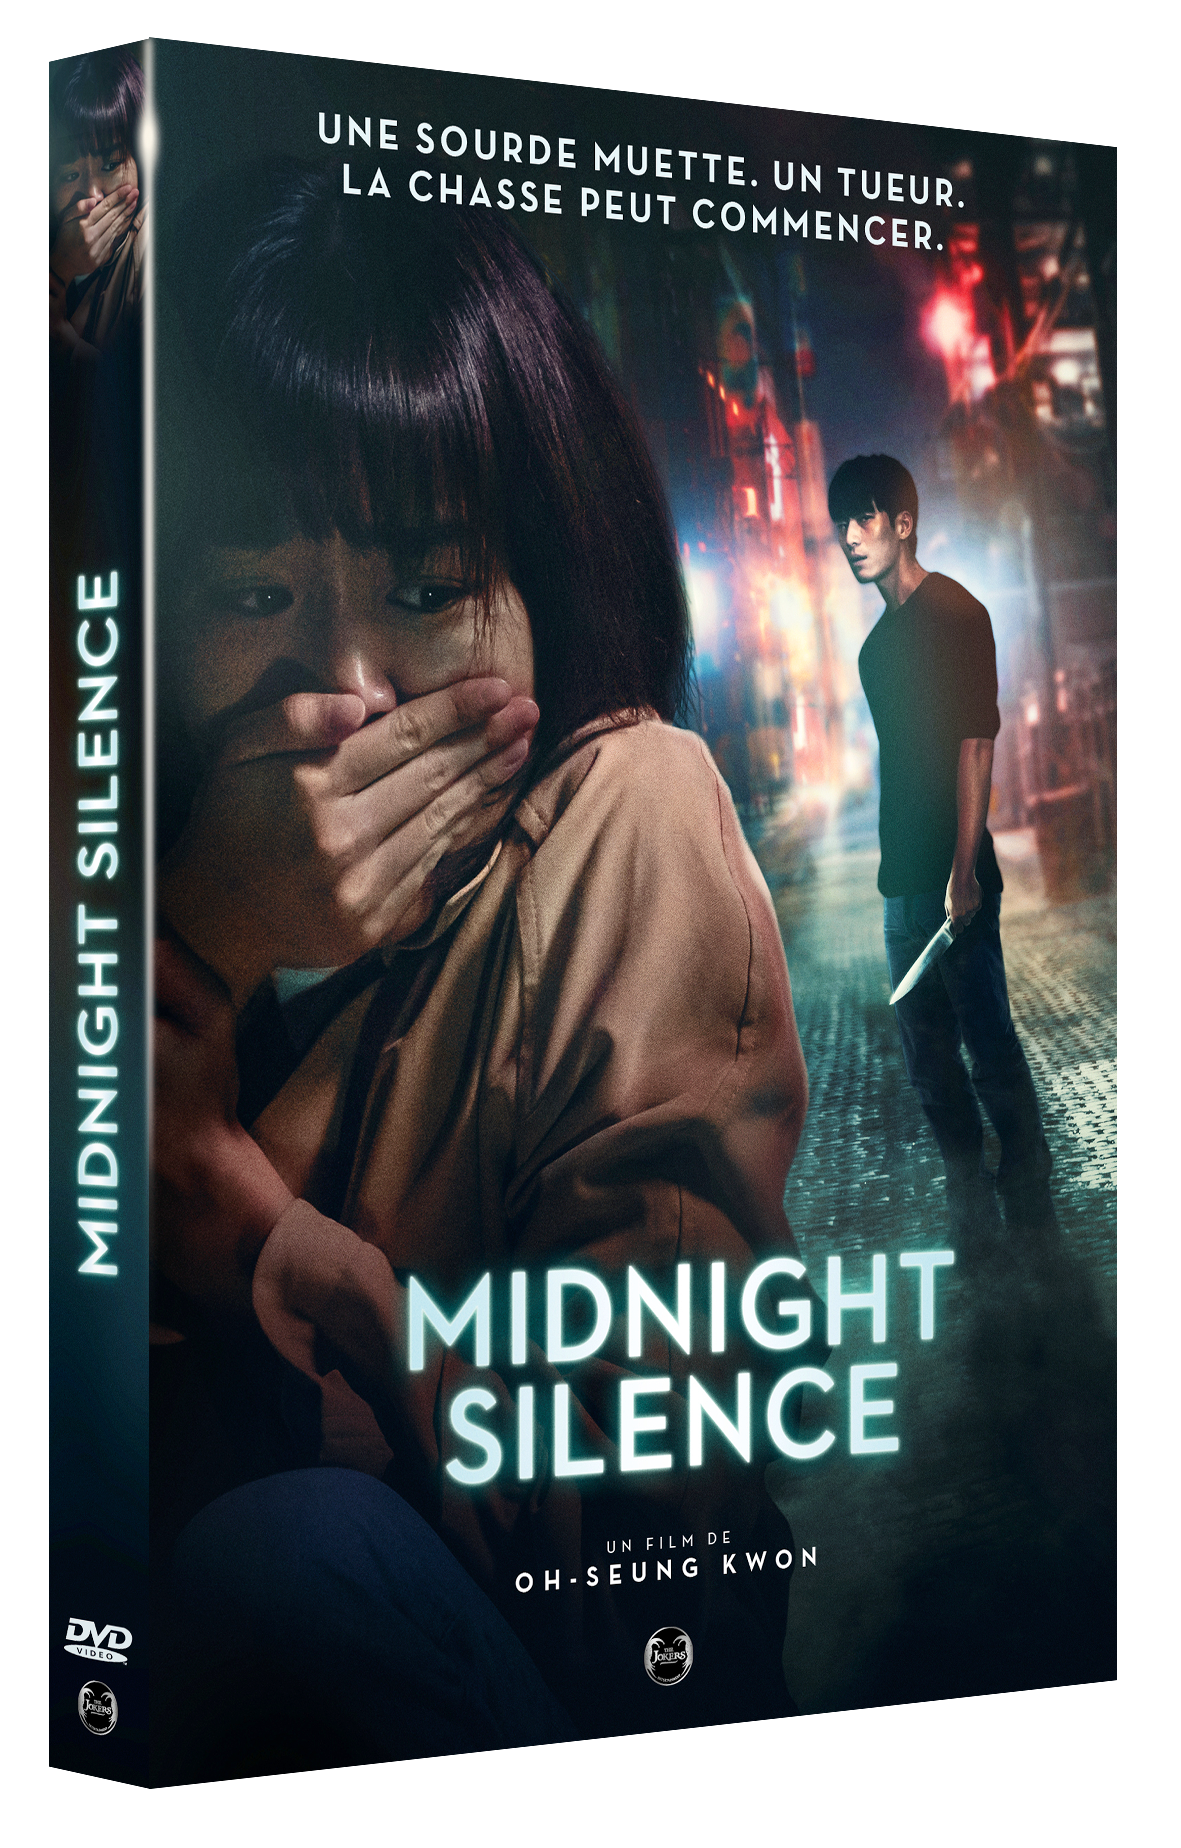 DVD "Midnight Silence"